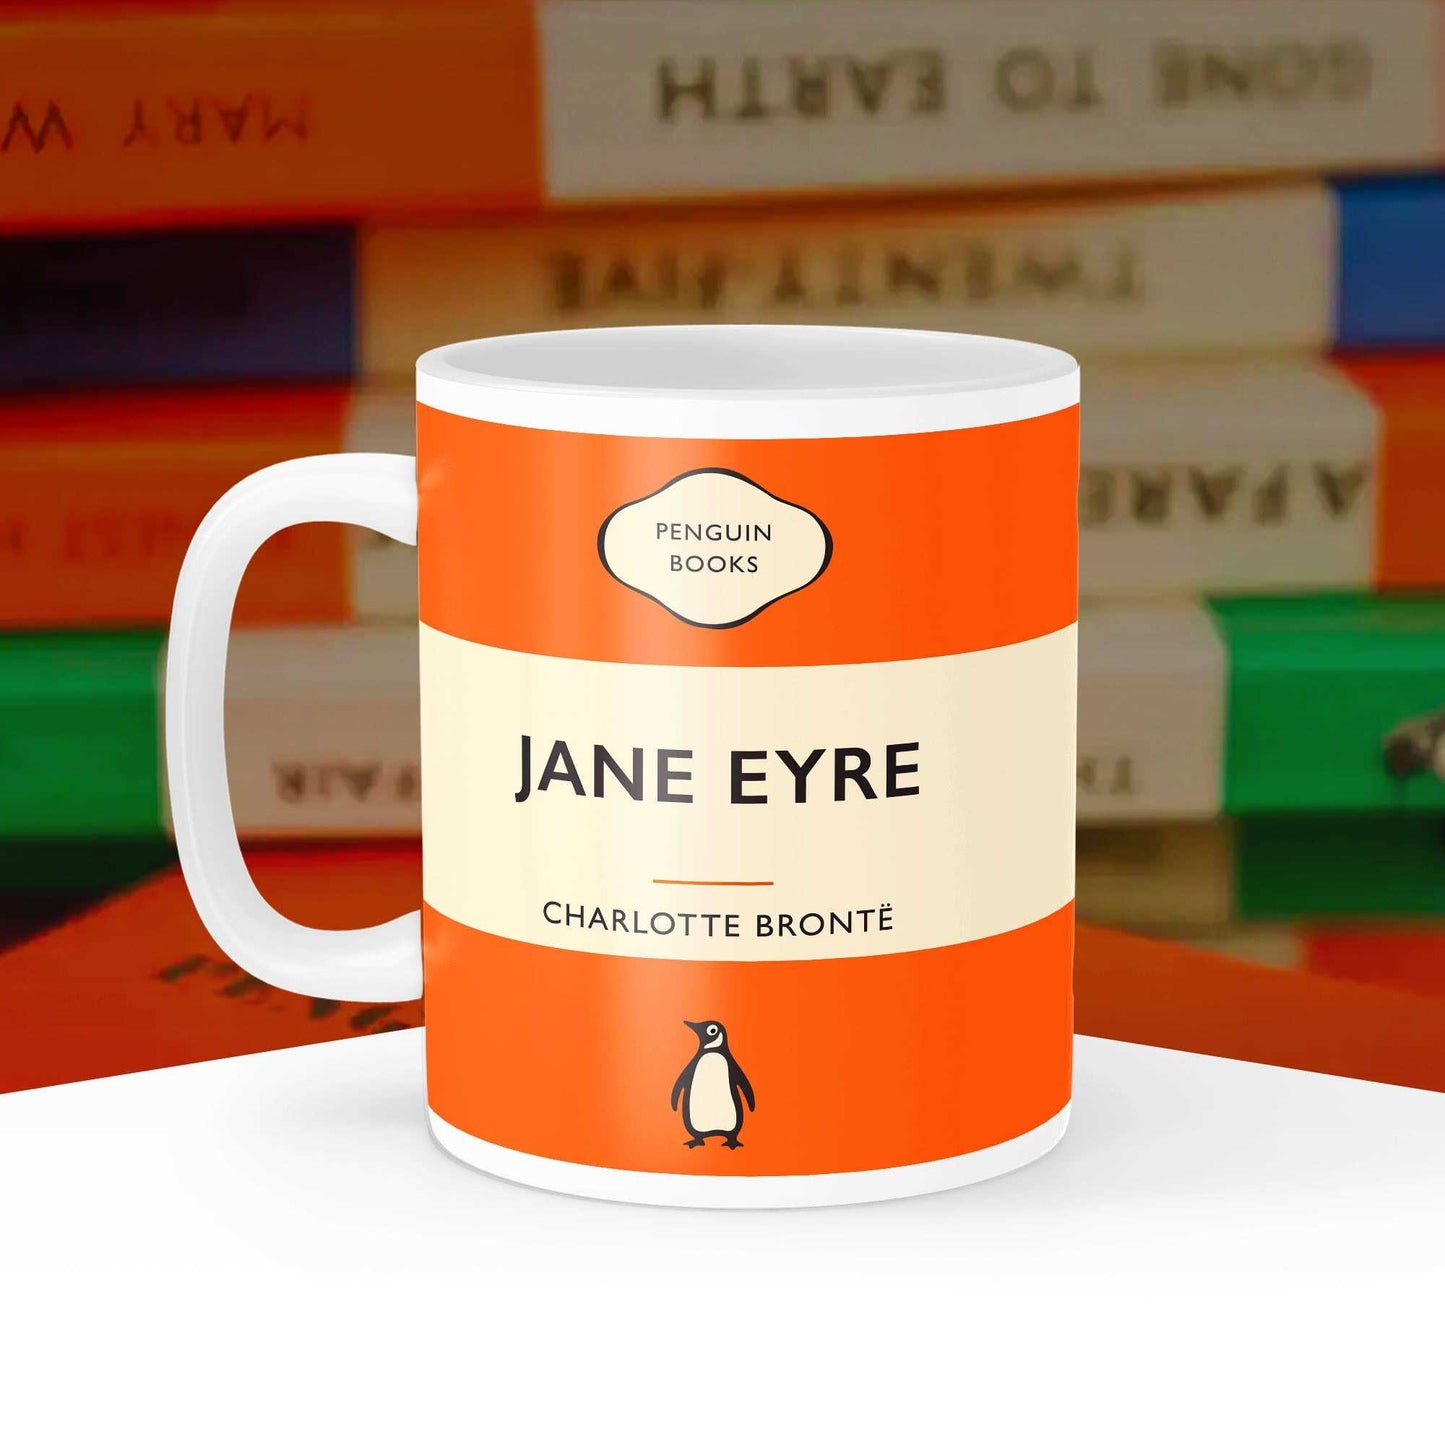 Jane Eyre - Charlotte Bronte Penguin Book Cover Mug